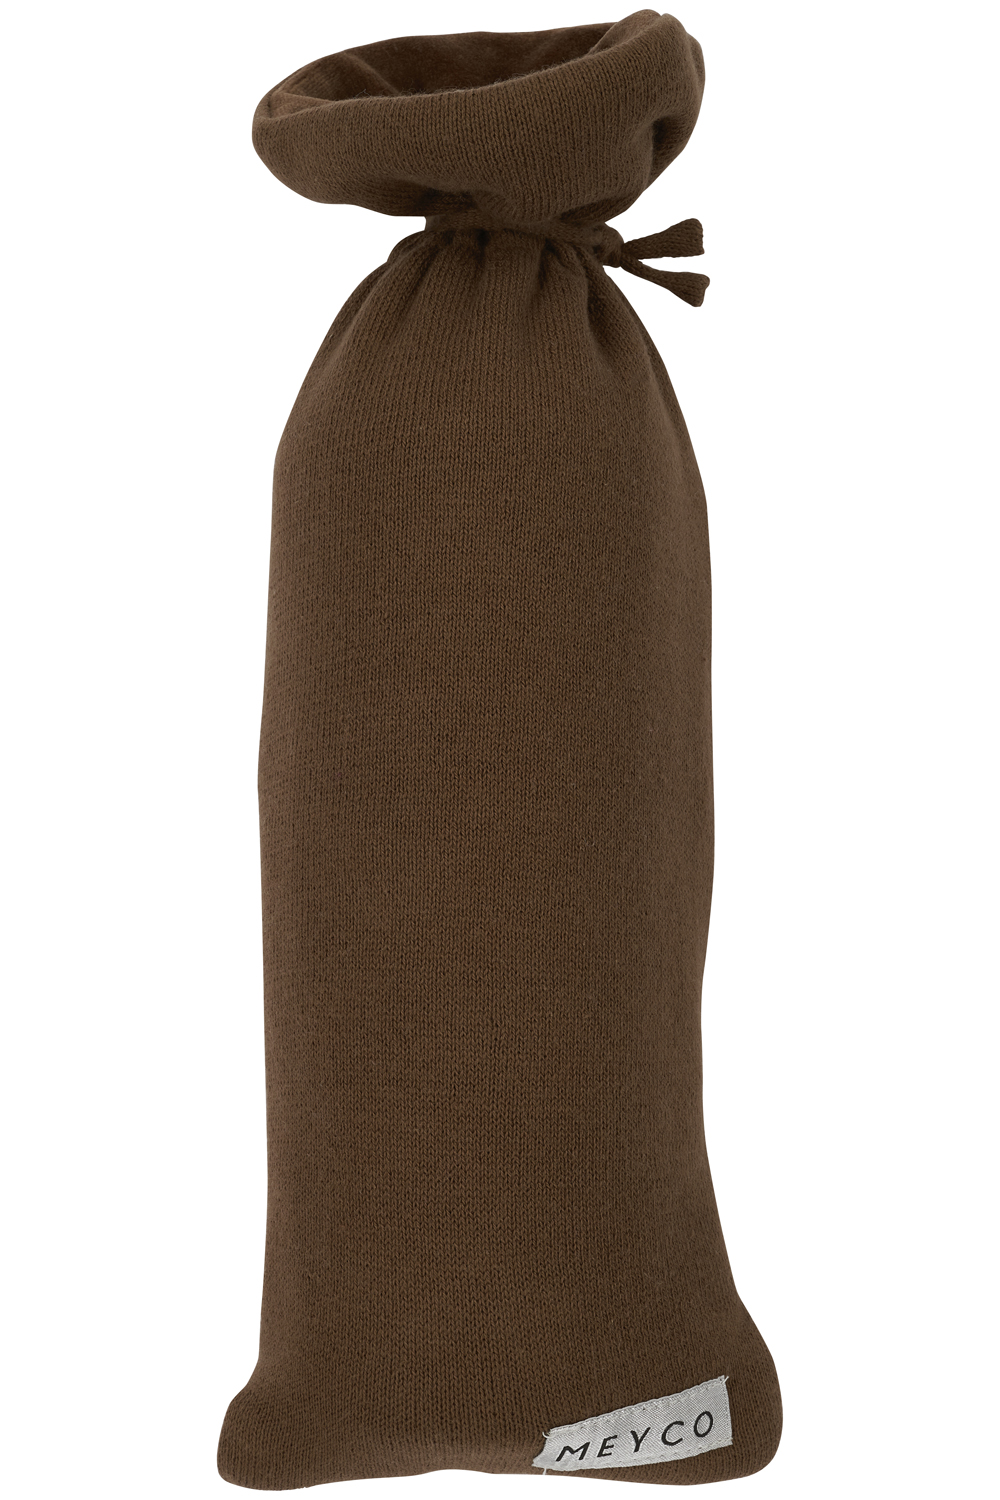 Wärmflaschenbezug Knit Basic - Chocolate - 13xh35cm